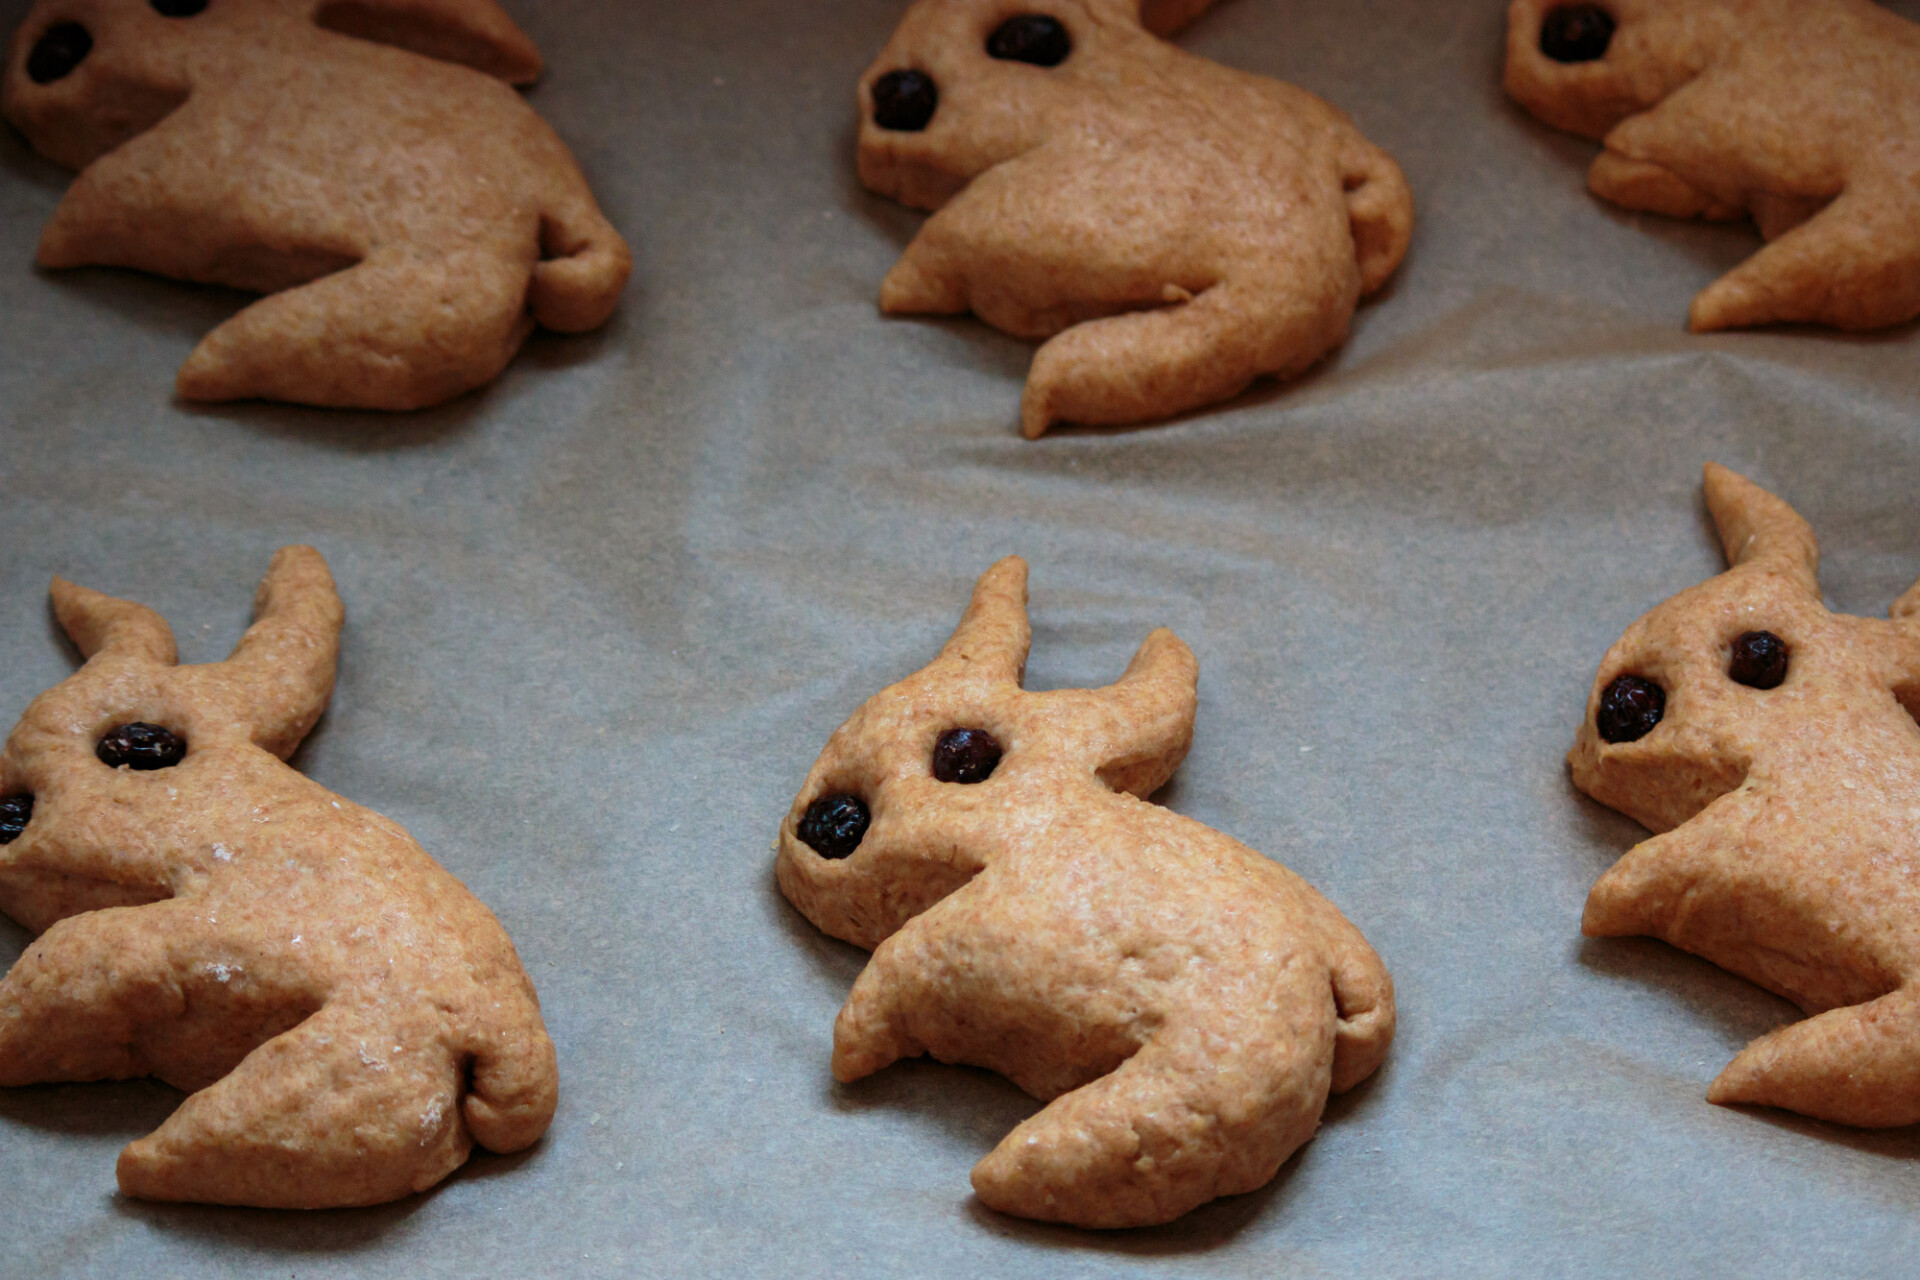 Bunny biscuits